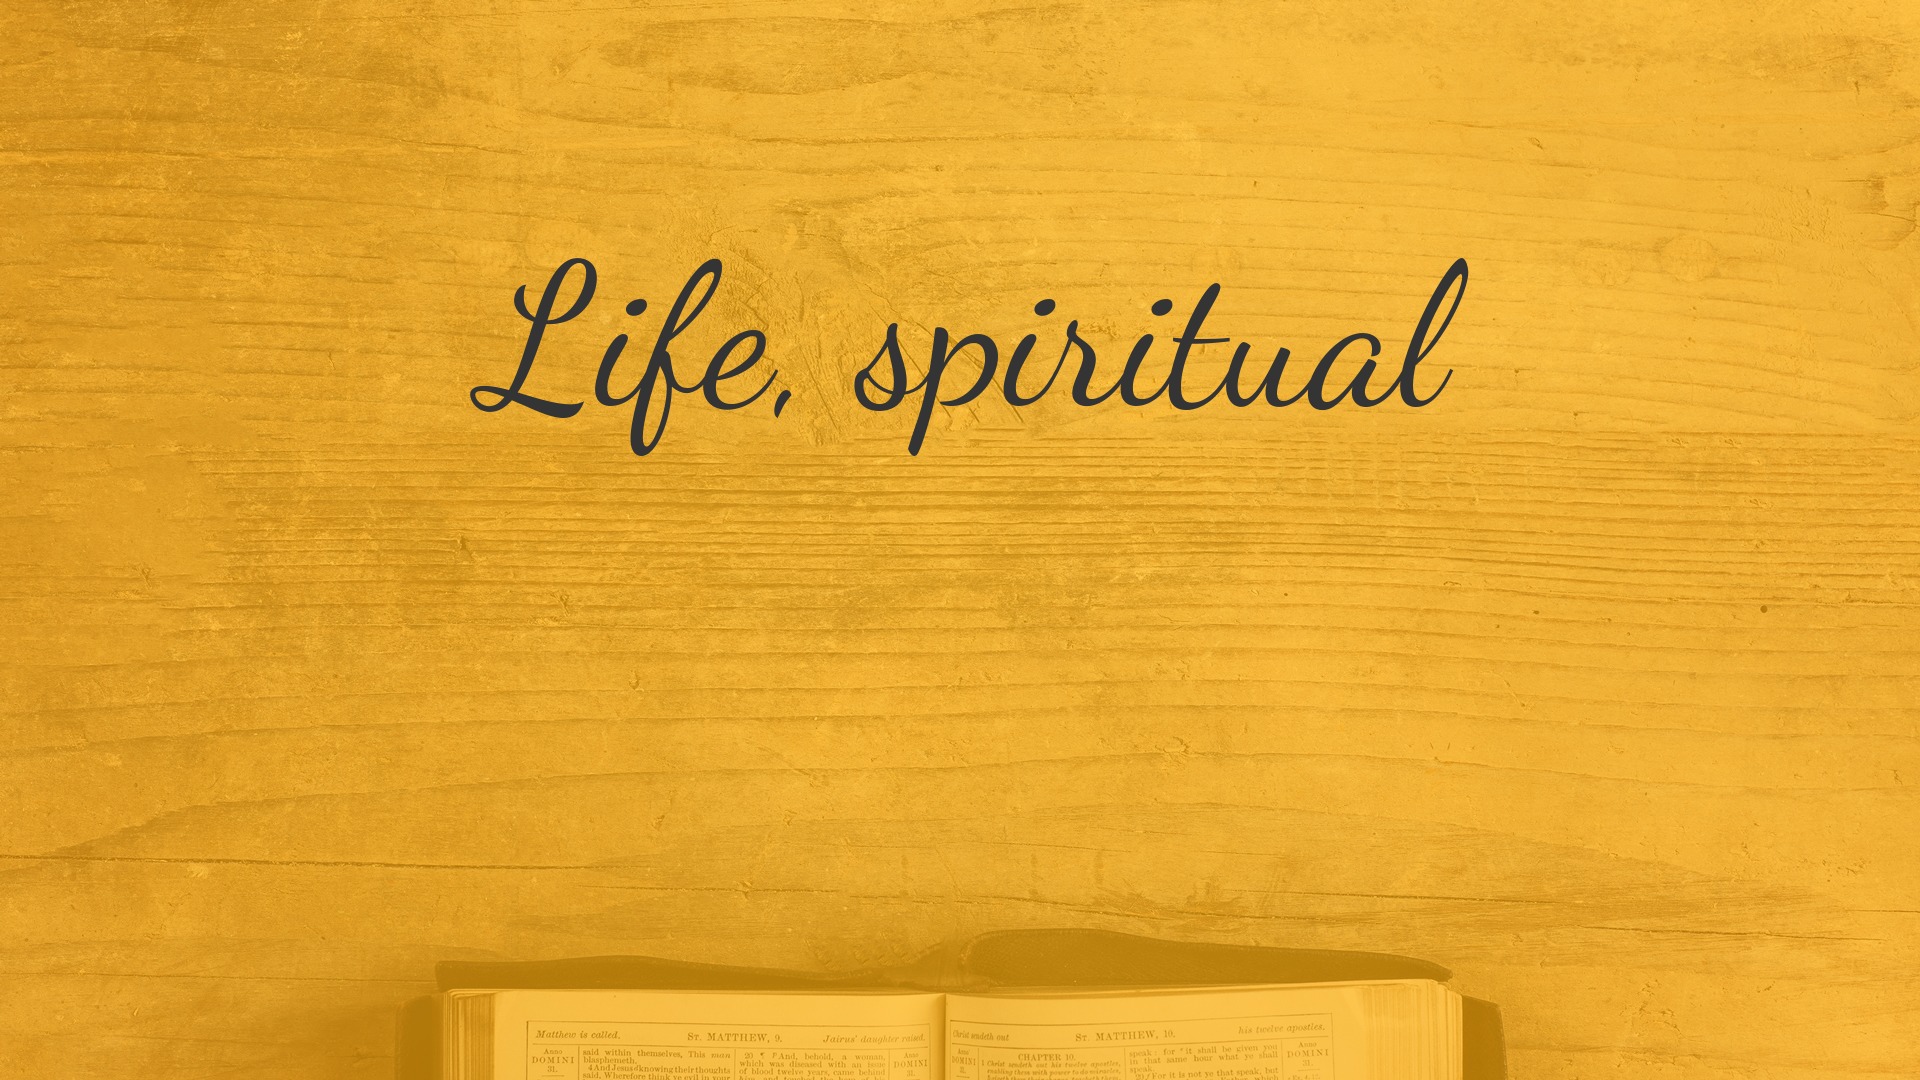 Life, spiritual